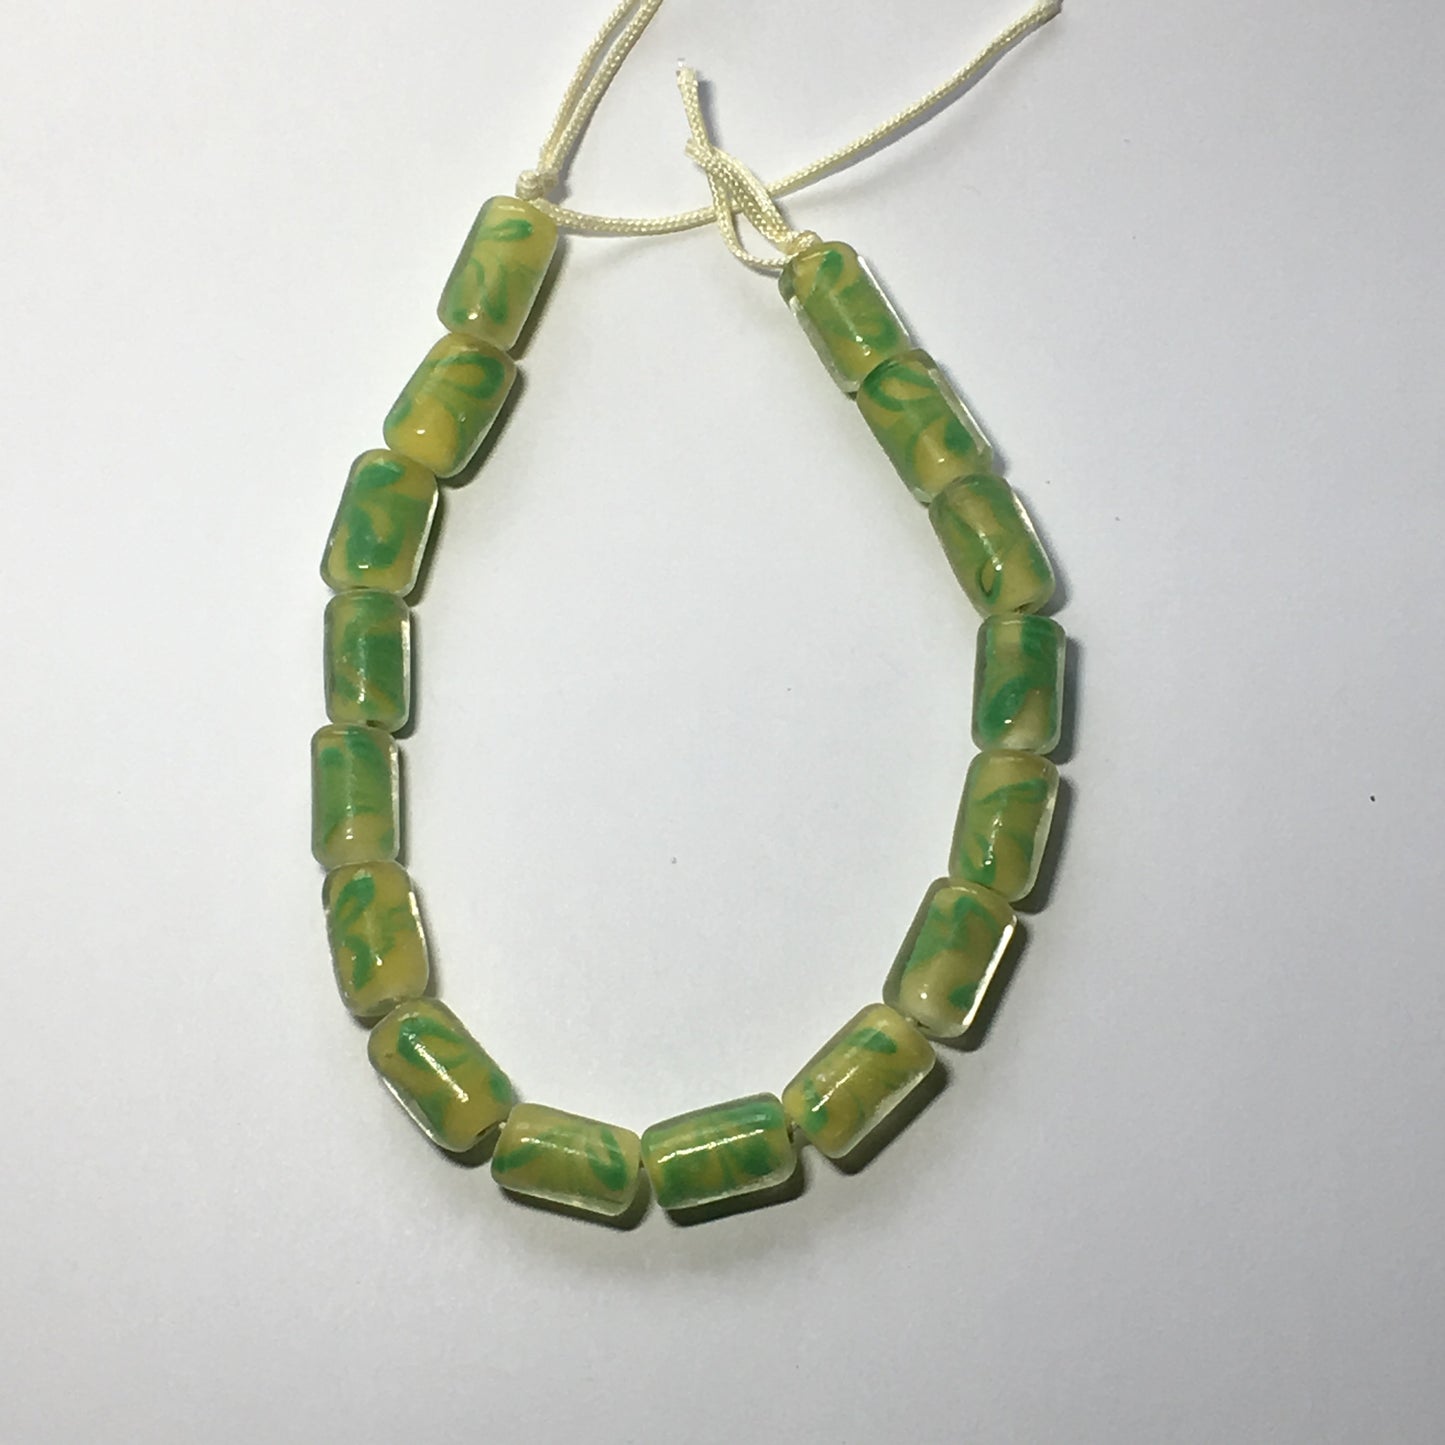 Yellow and Green Swirl Lampwork Glass Tube Beads, 13 x 8 mm - 16 Beads